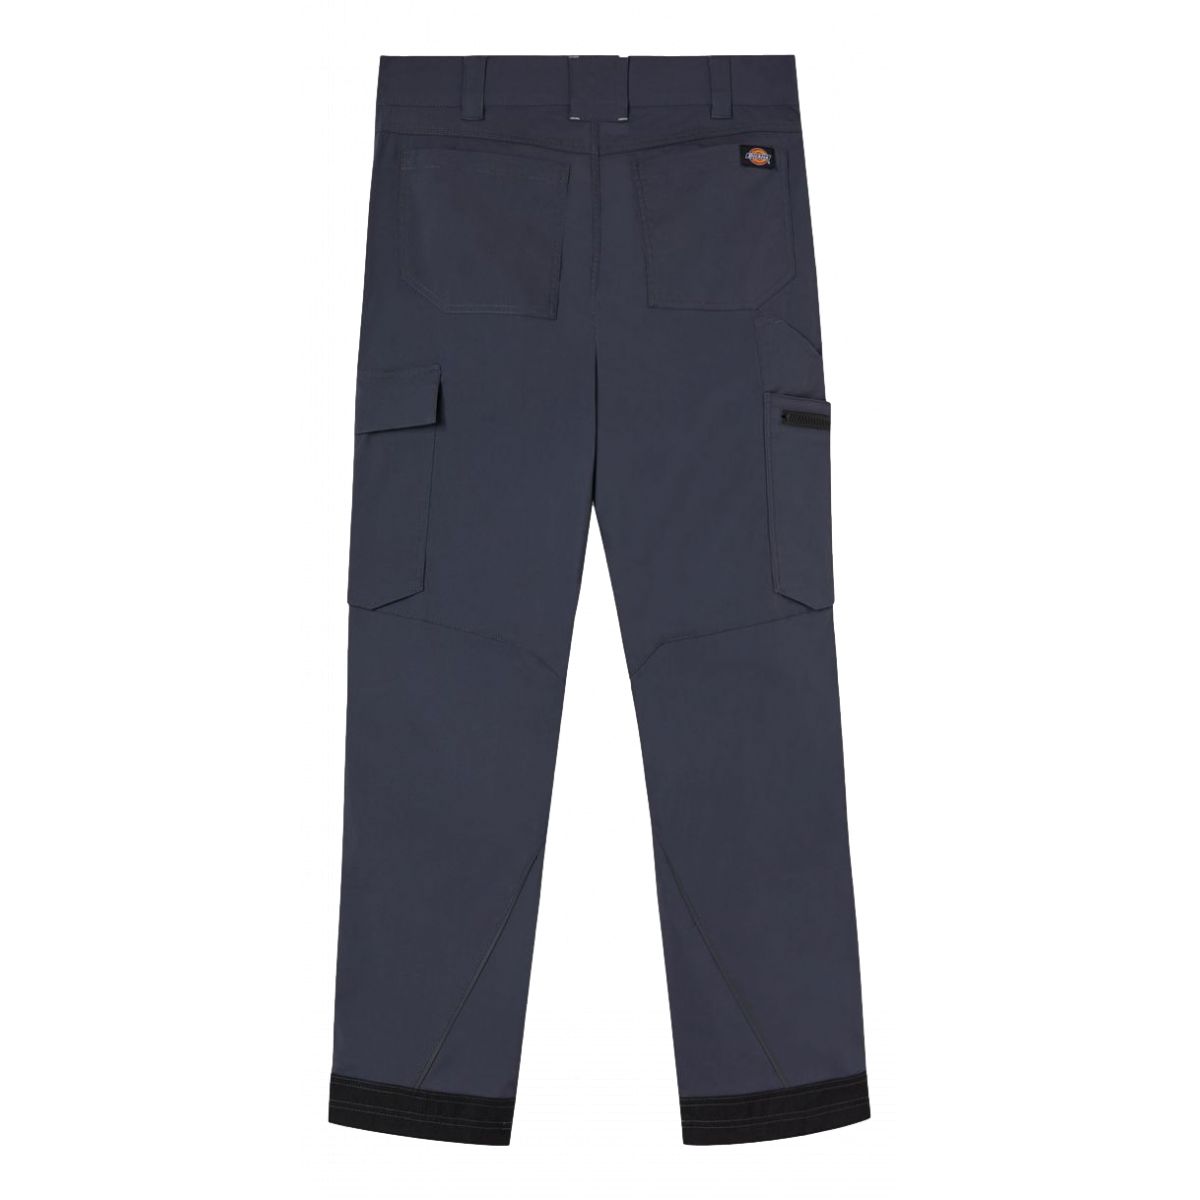 Pantalon léger Flex Gris - Dickies - Taille 50 1